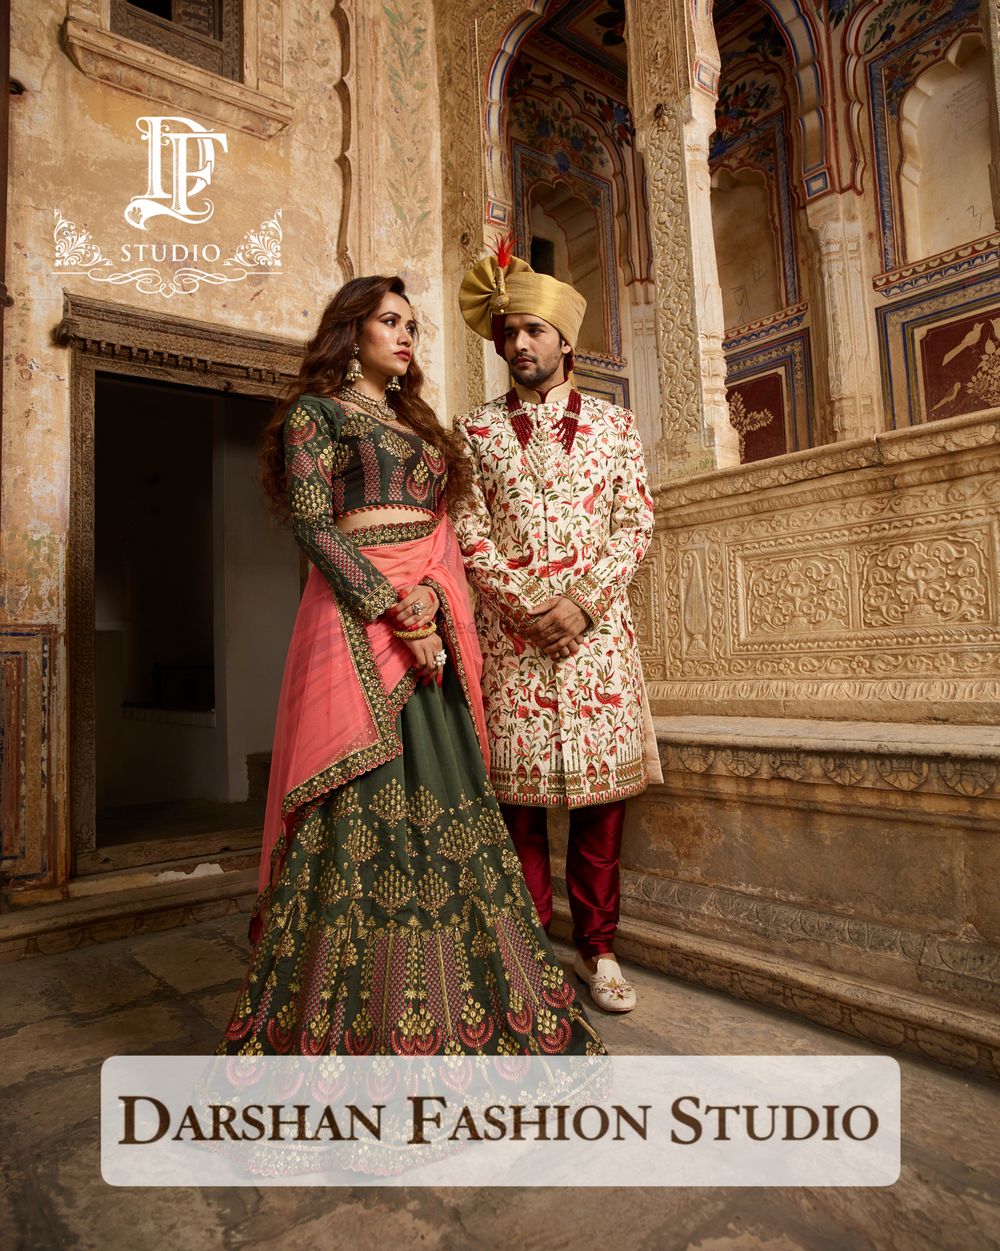 Photo From darshan fashion studio 2020 - By Darshan Fashion Studio